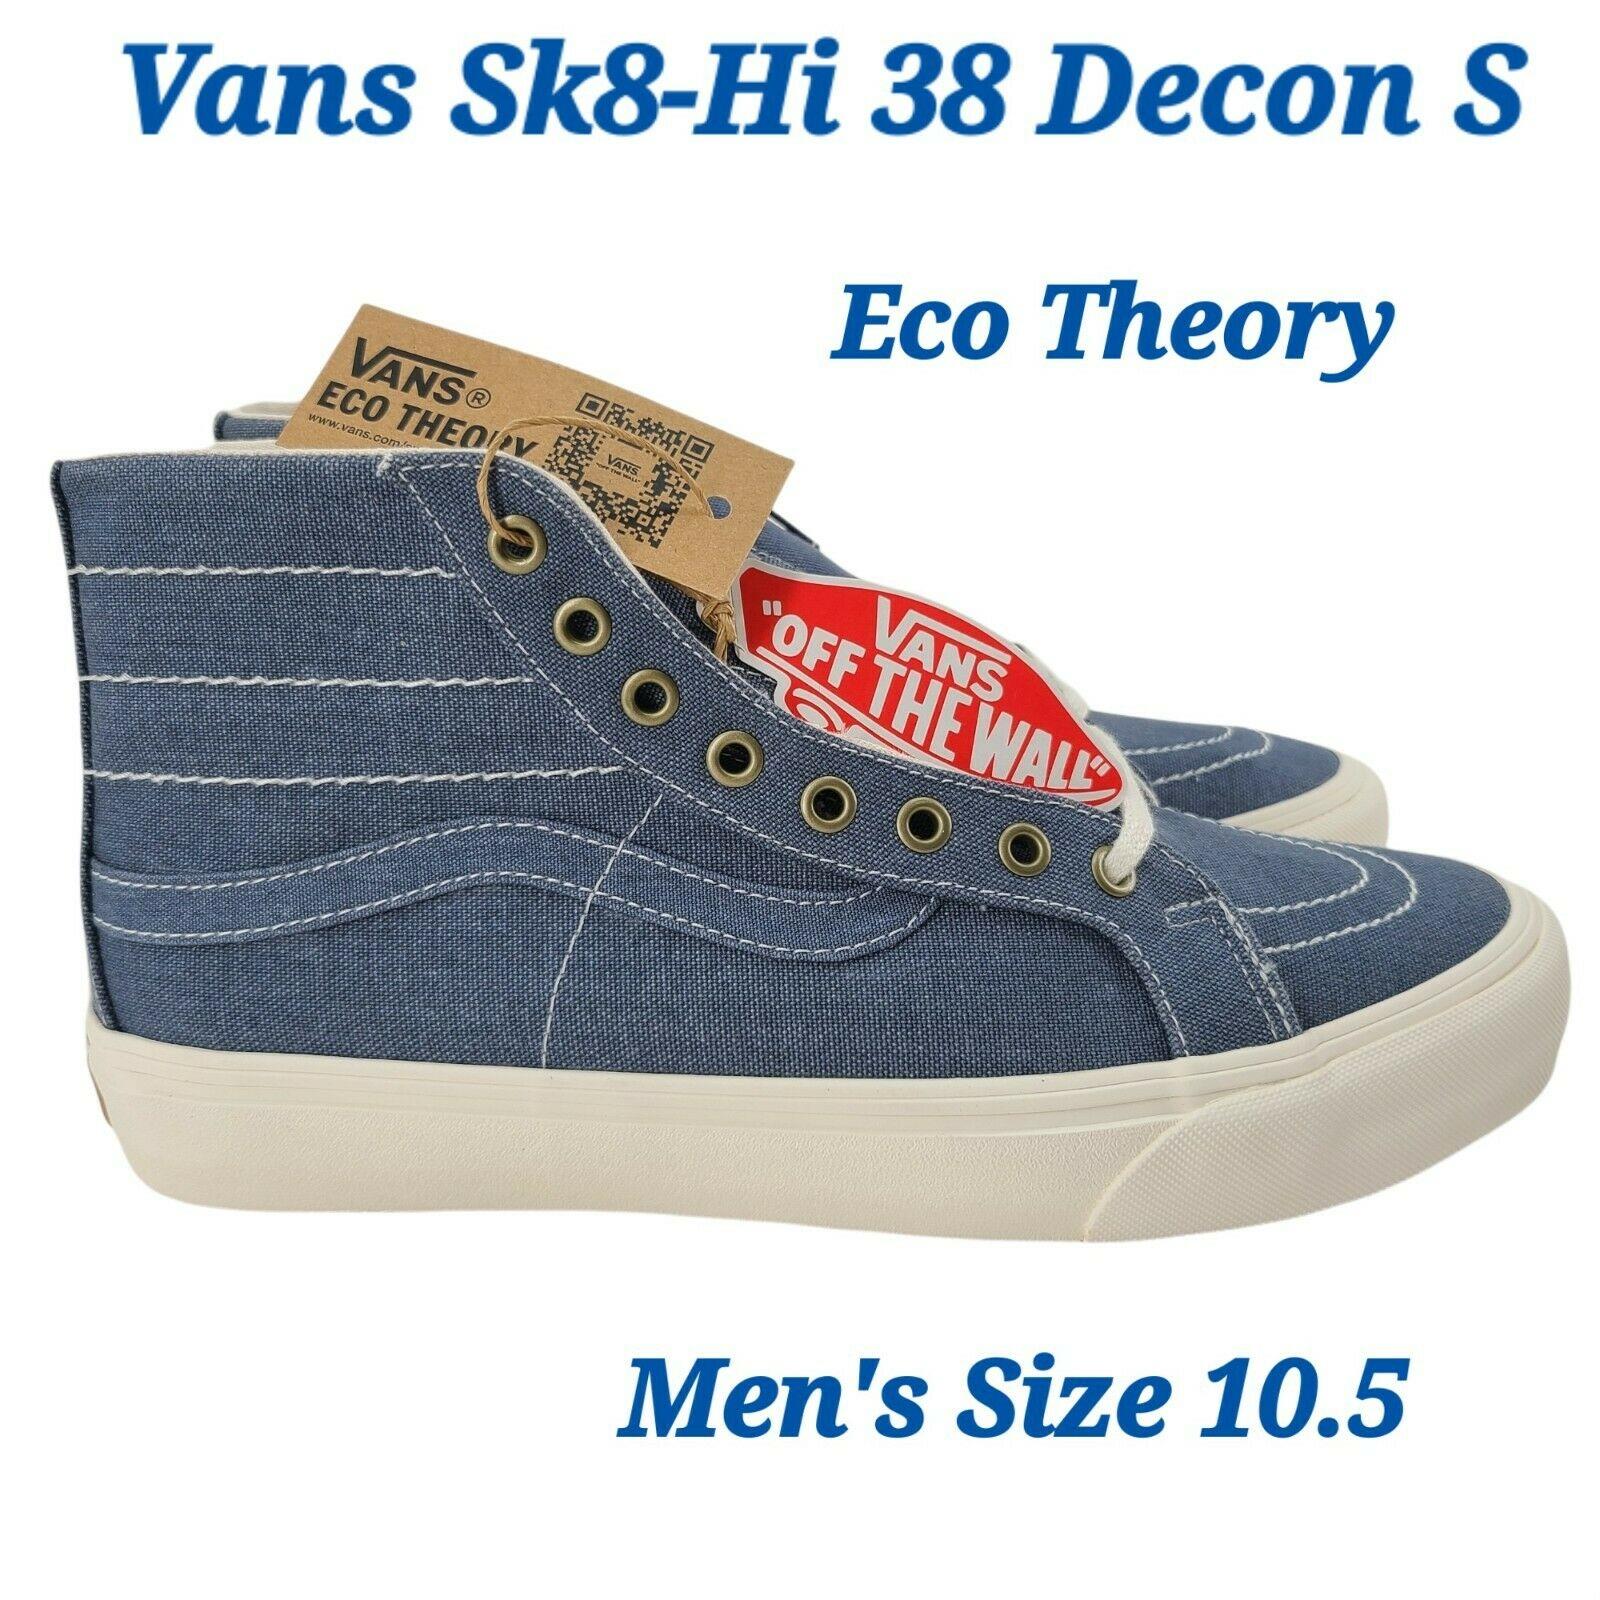 Vans Sk8-Hi 38 Decon S Eco Theory Shoe Skate Sneakers Men`s Size 10.5 Blue